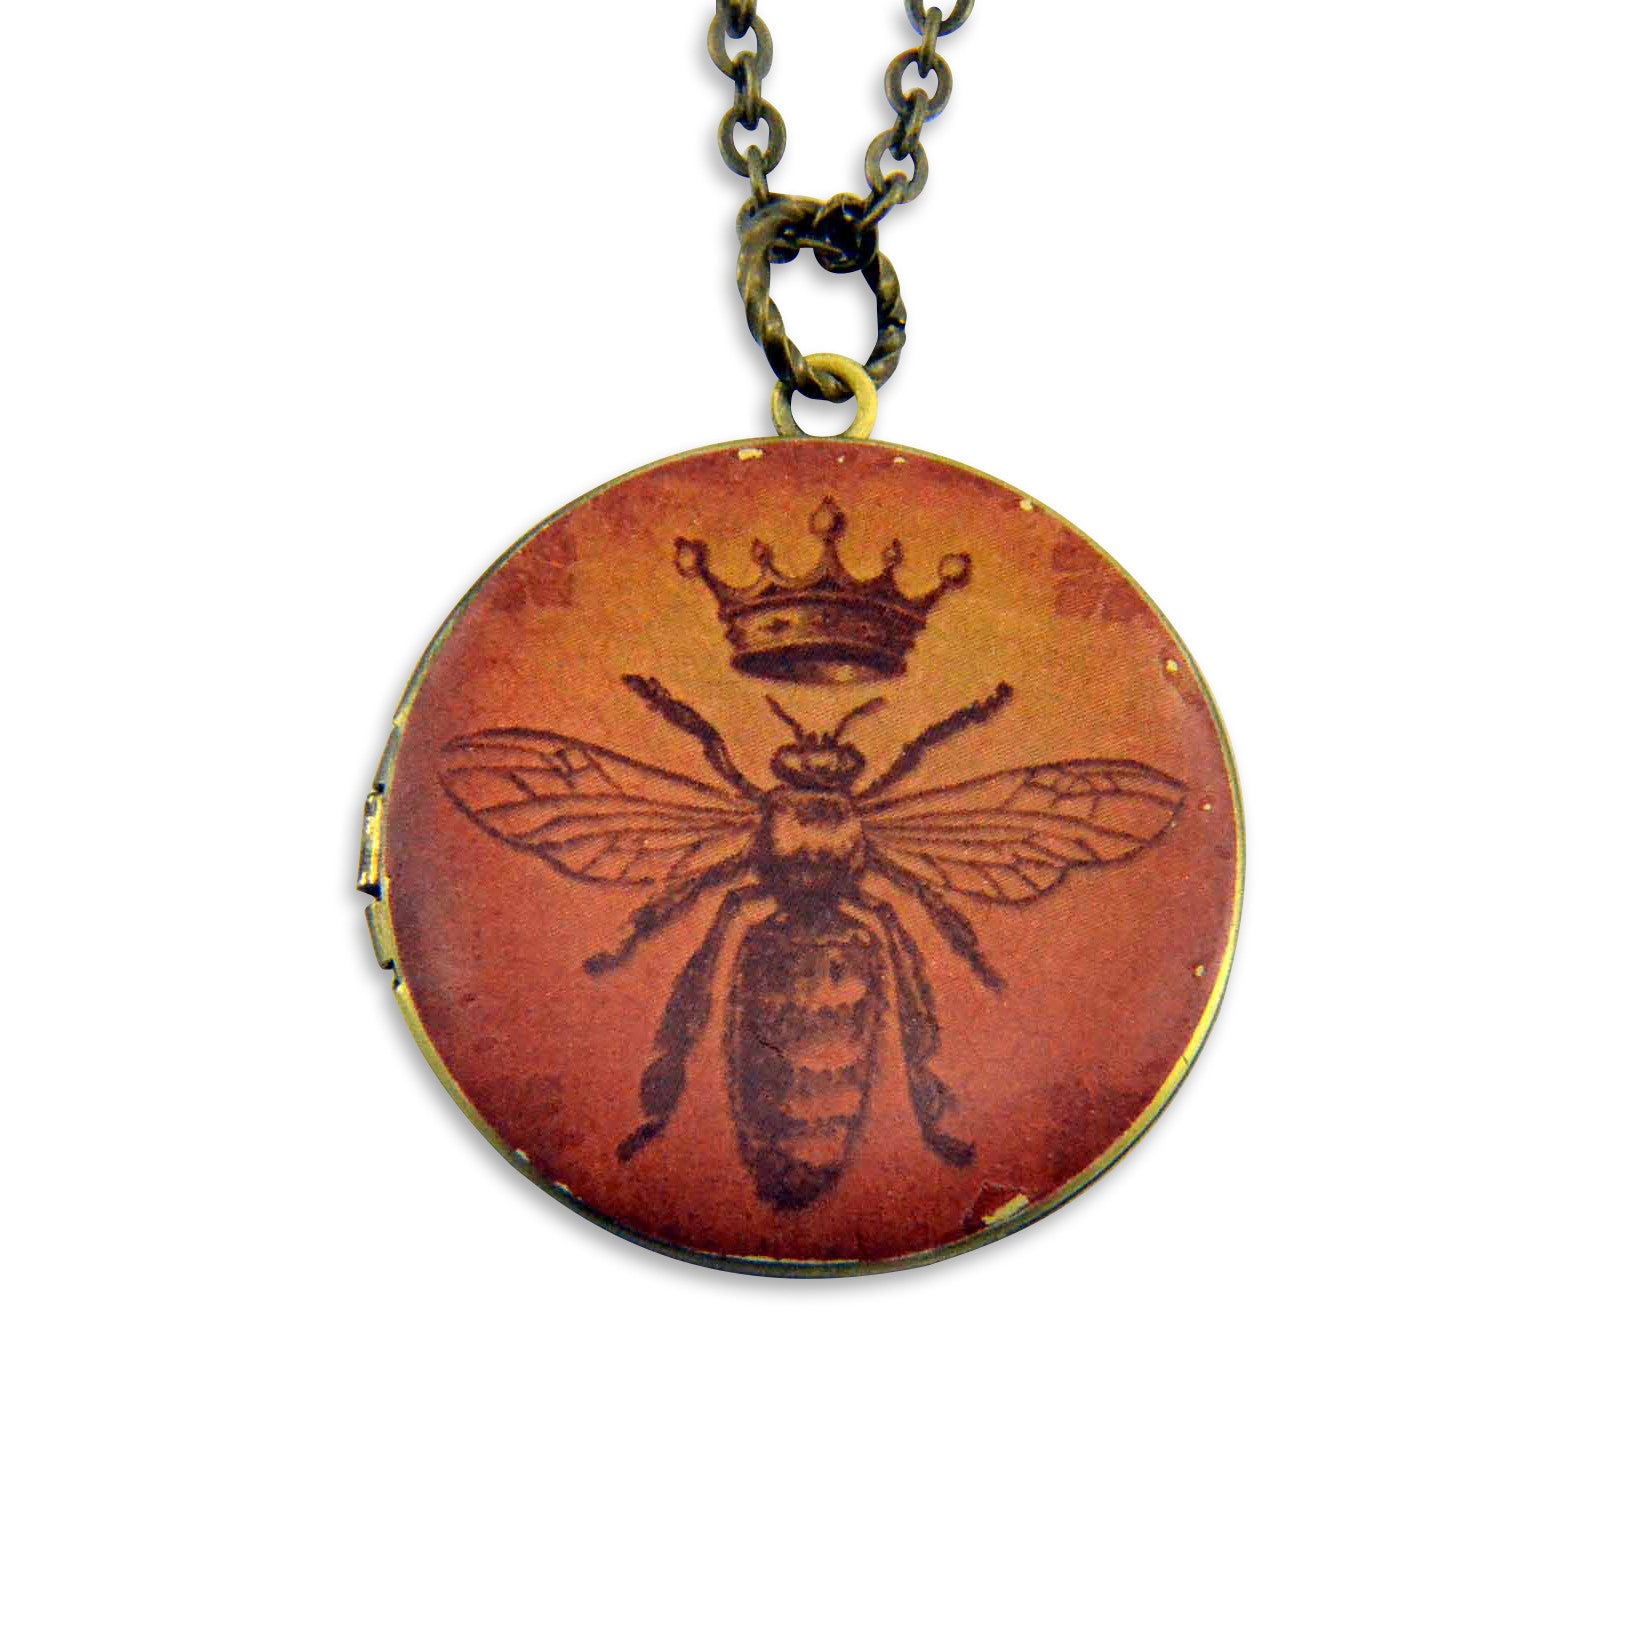 Queen Bee Vintage Theme Photo Locket - Gwen Delicious Jewelry Designs